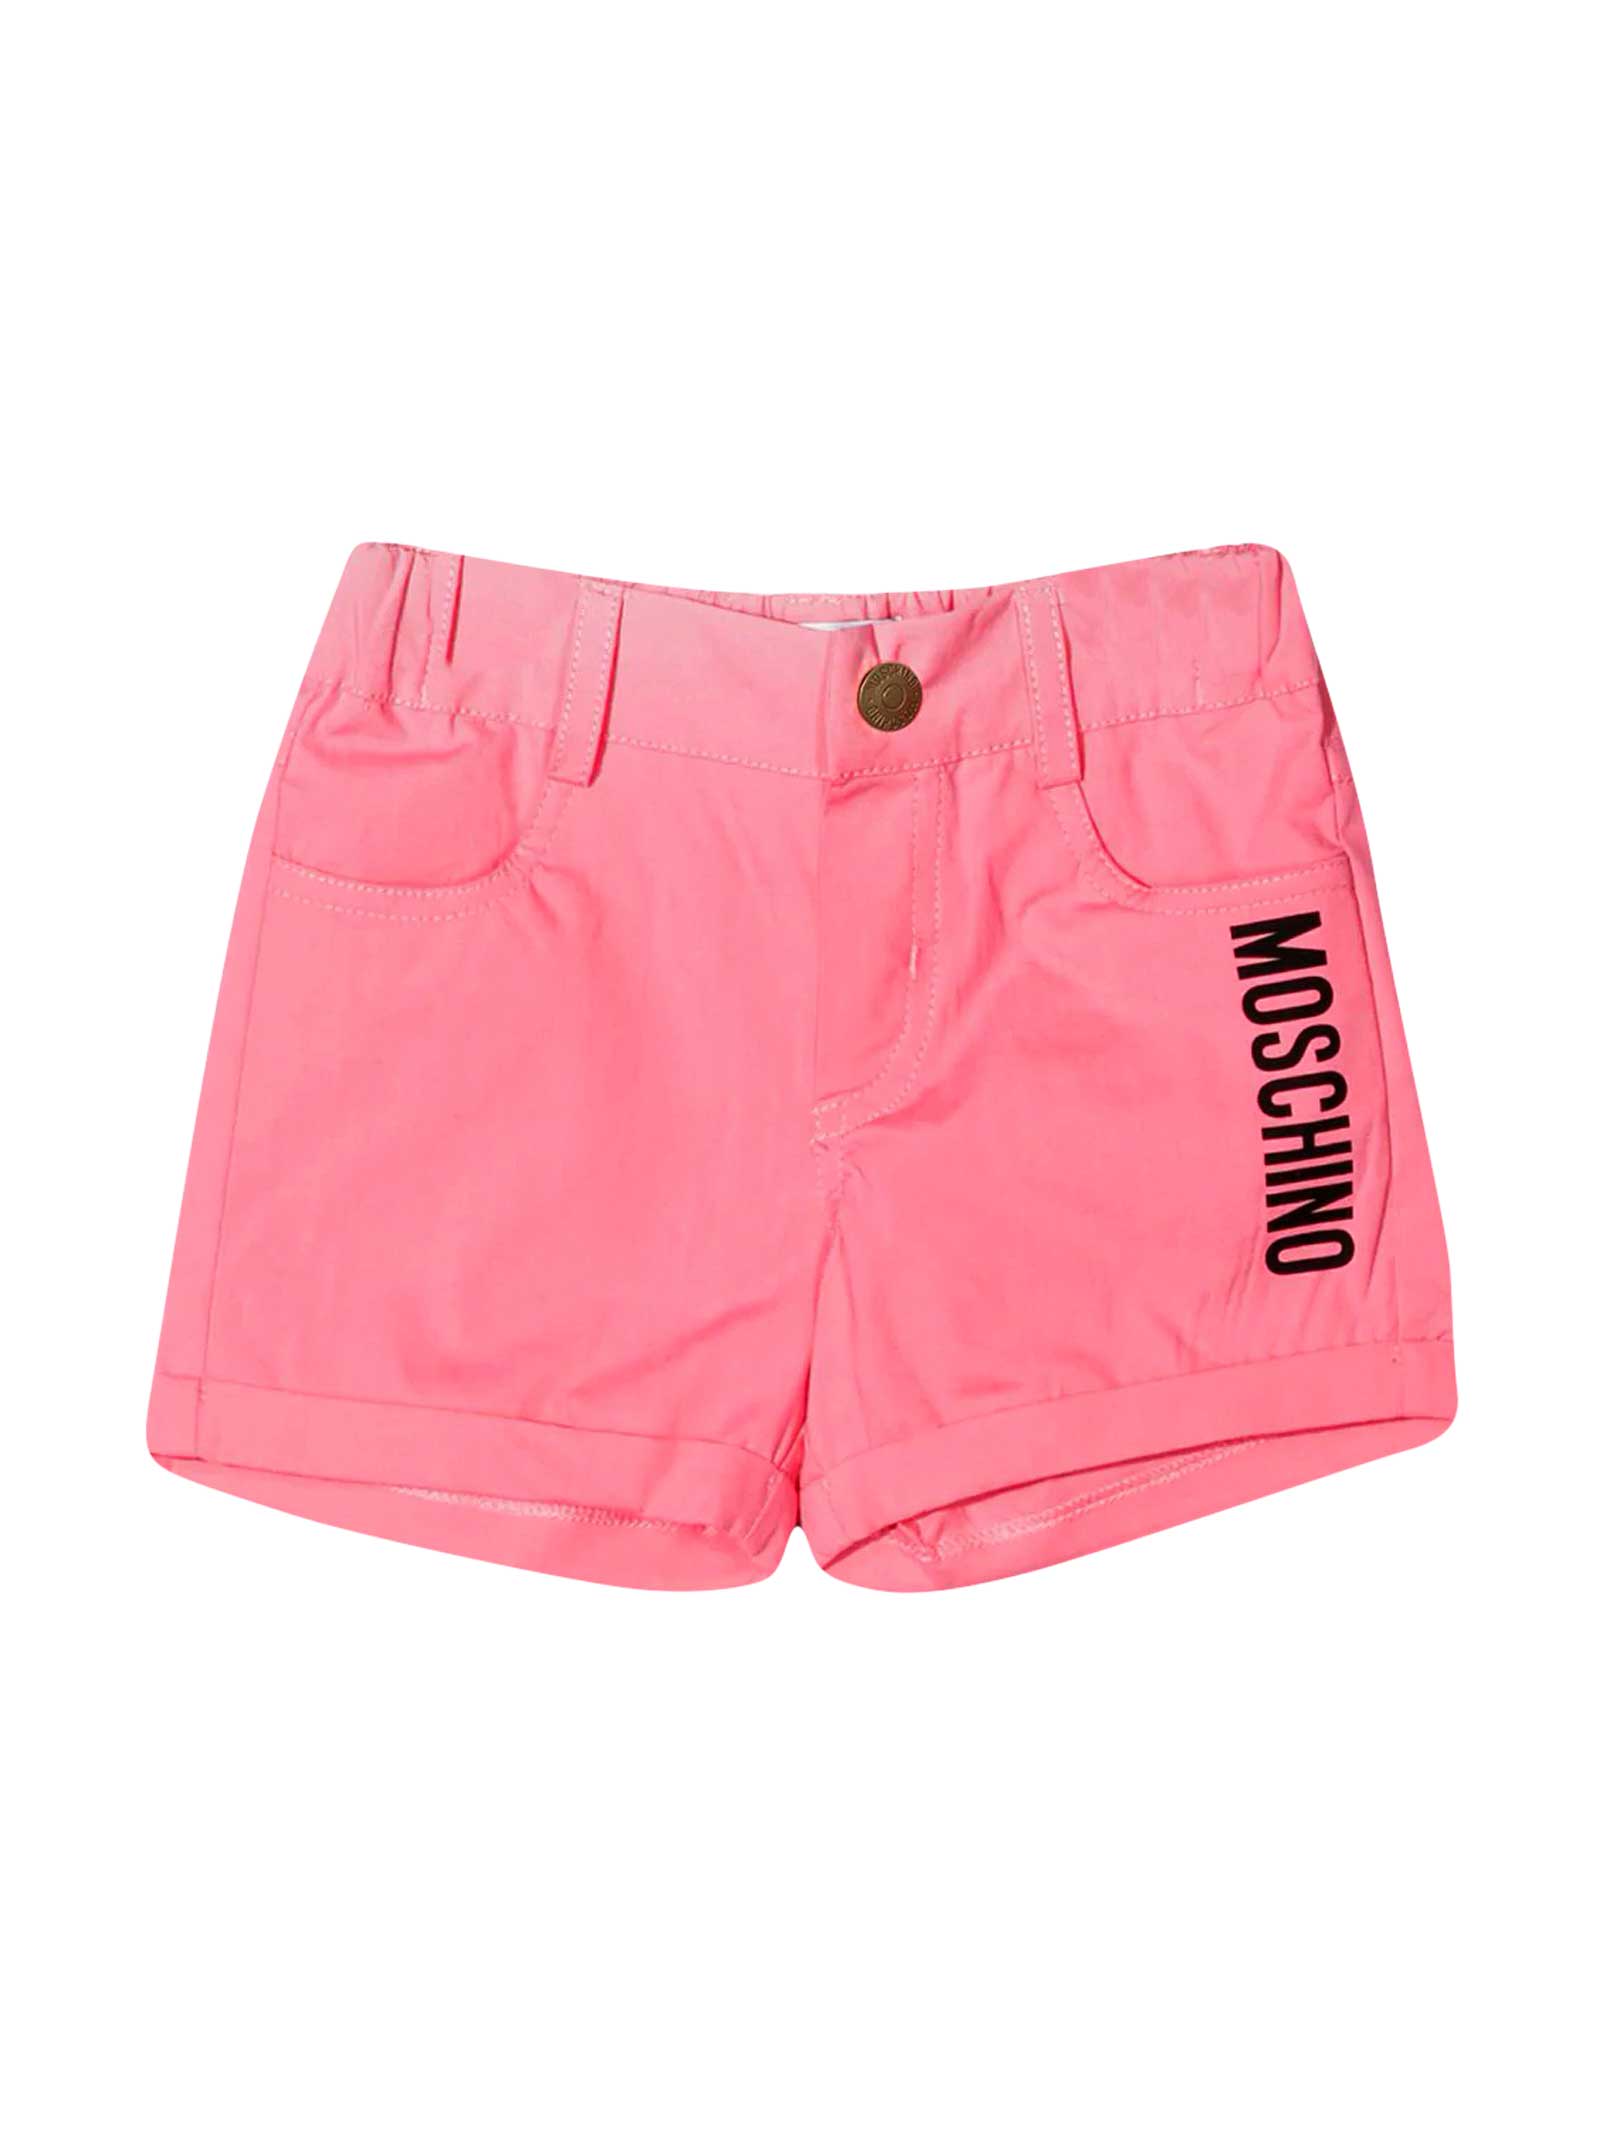 Moschino Pink Shorts